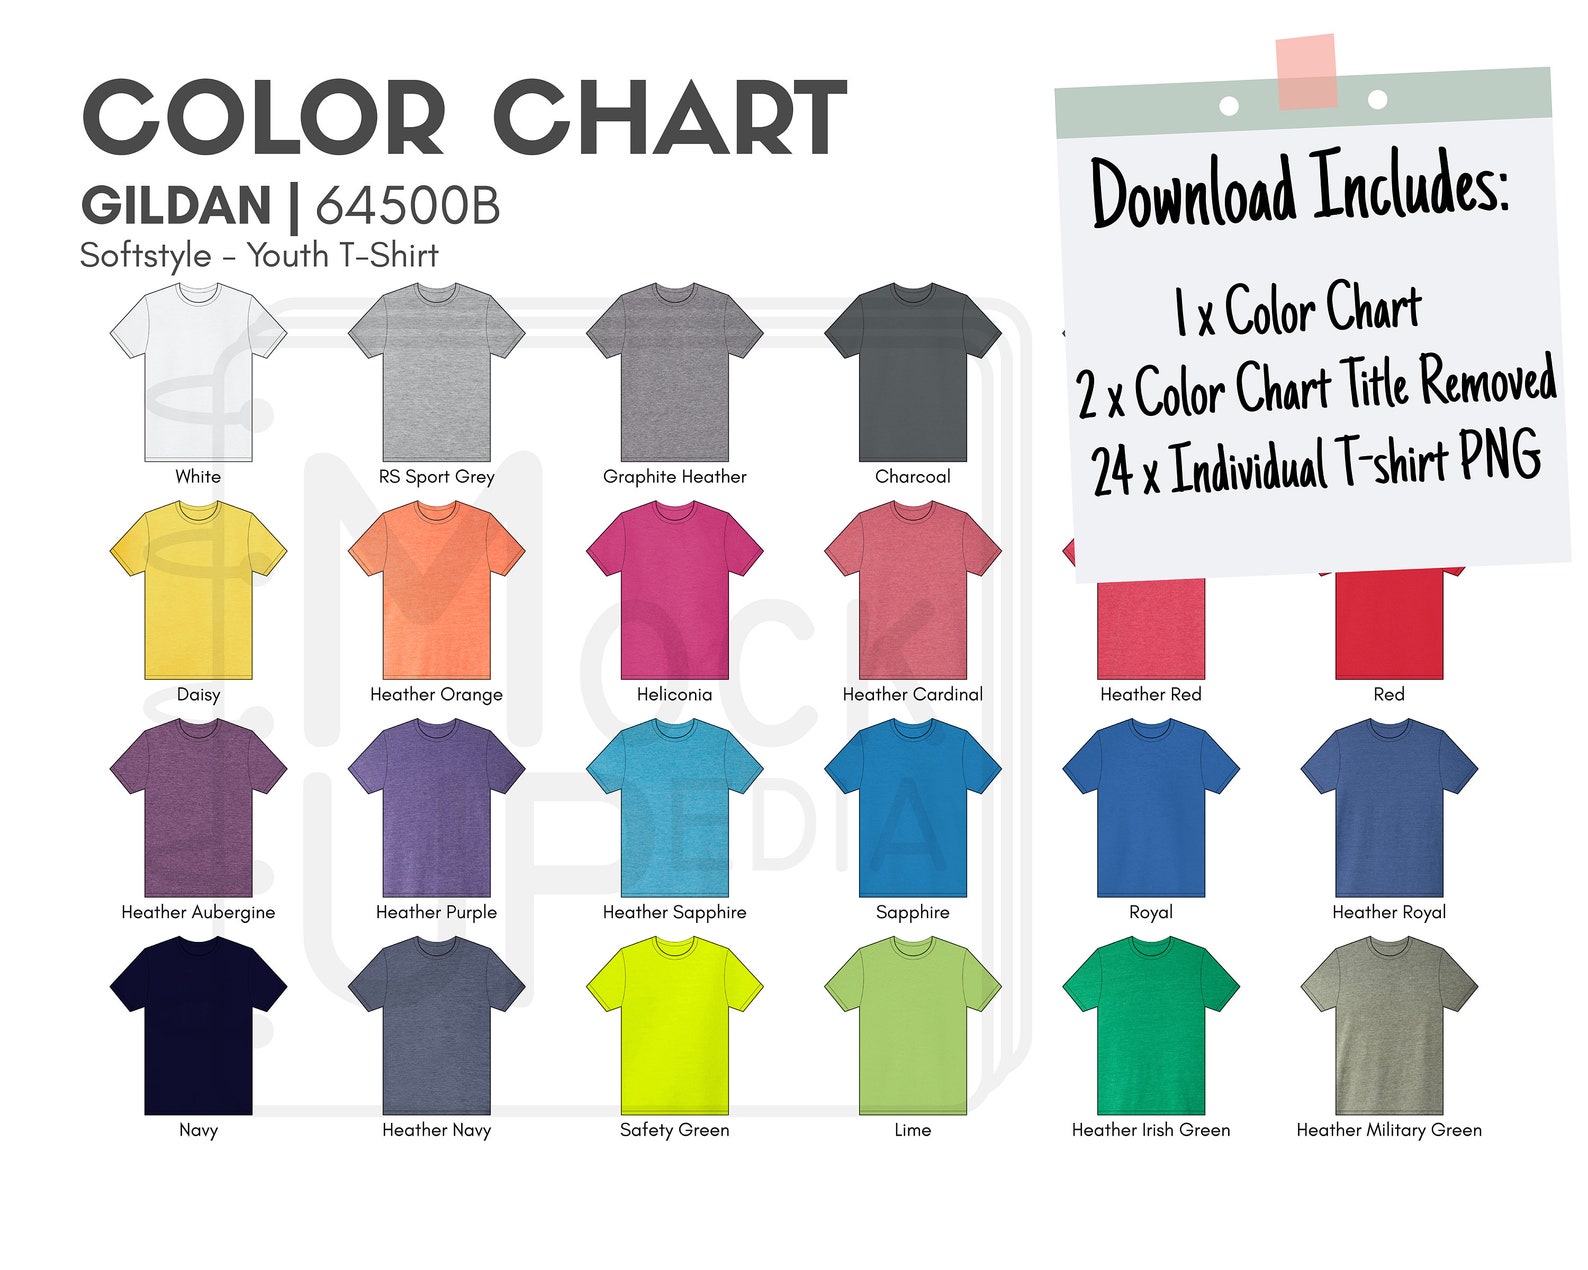 gildan-64500b-youth-t-shirt-color-chart-gildan-64500b-etsy